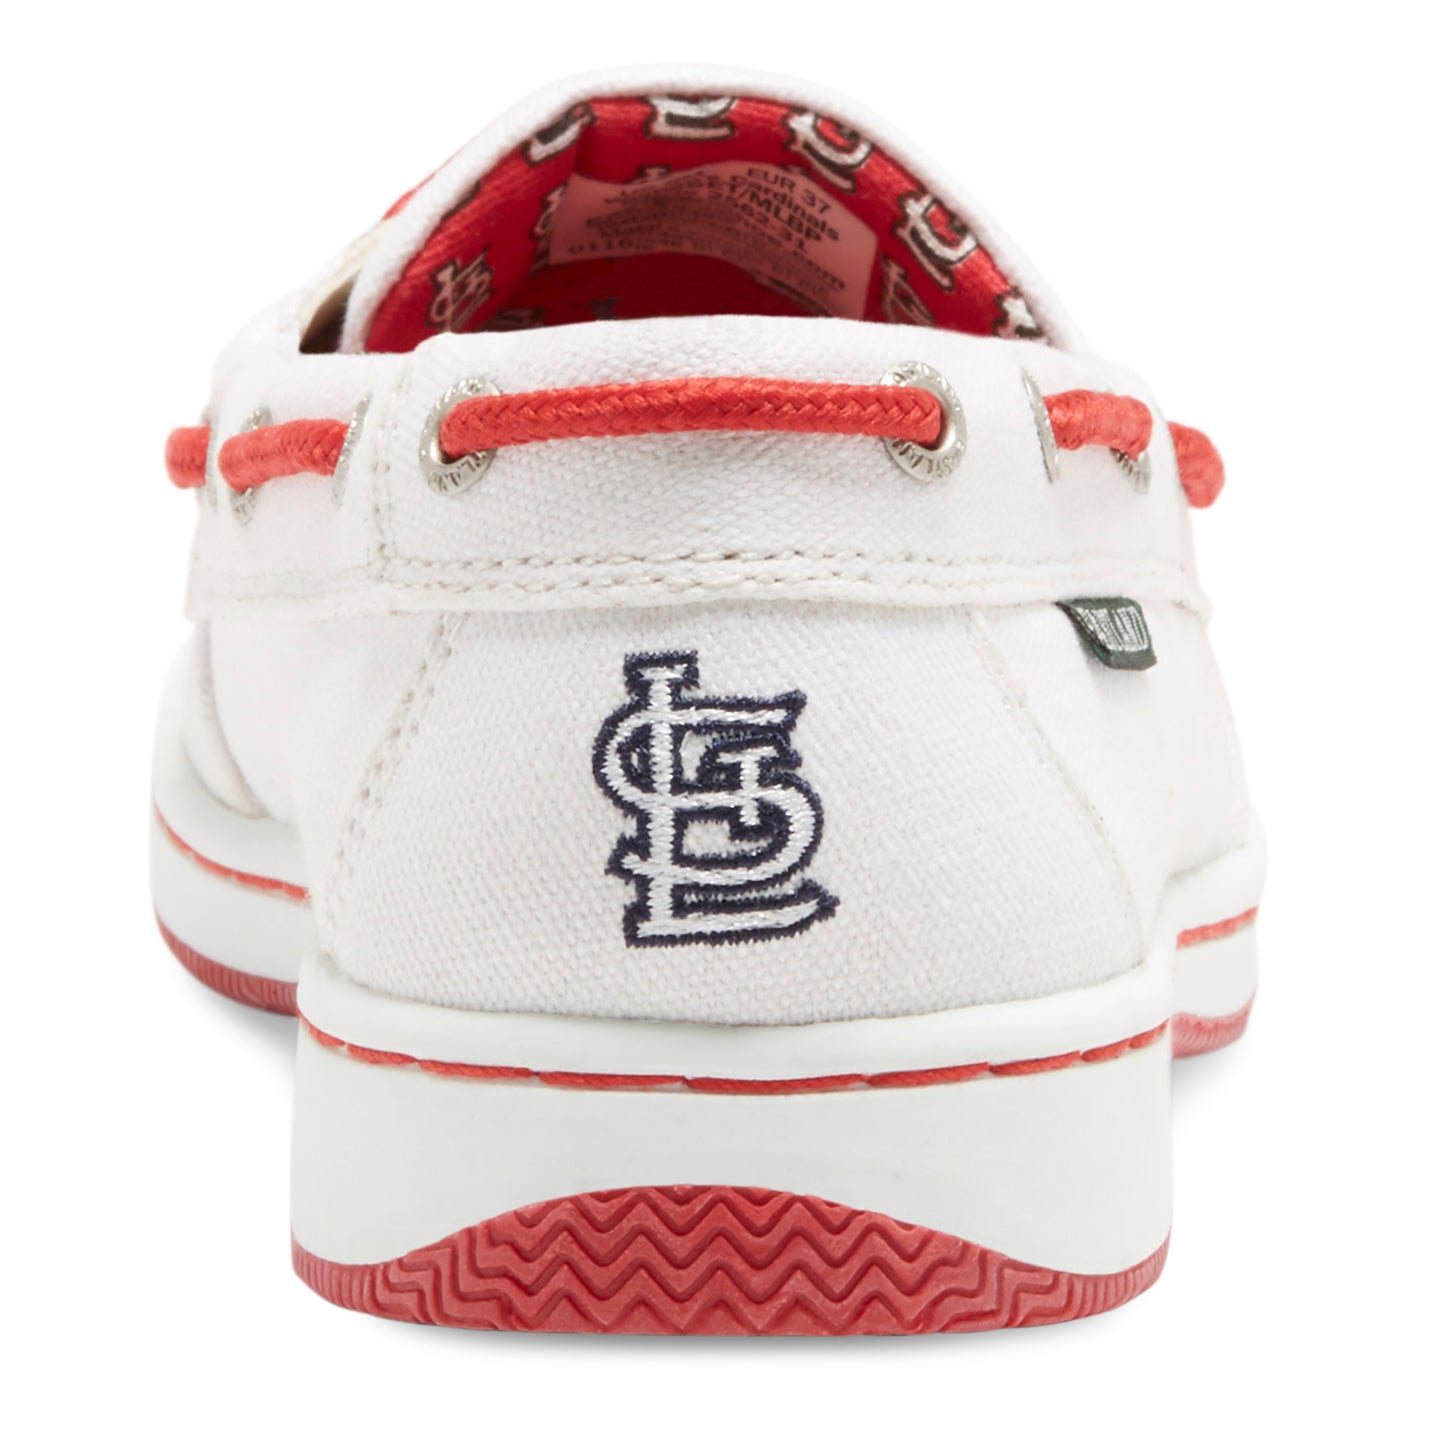 Women's Sunset MLB St Louis Cardinals White Canvas Boat Shoe